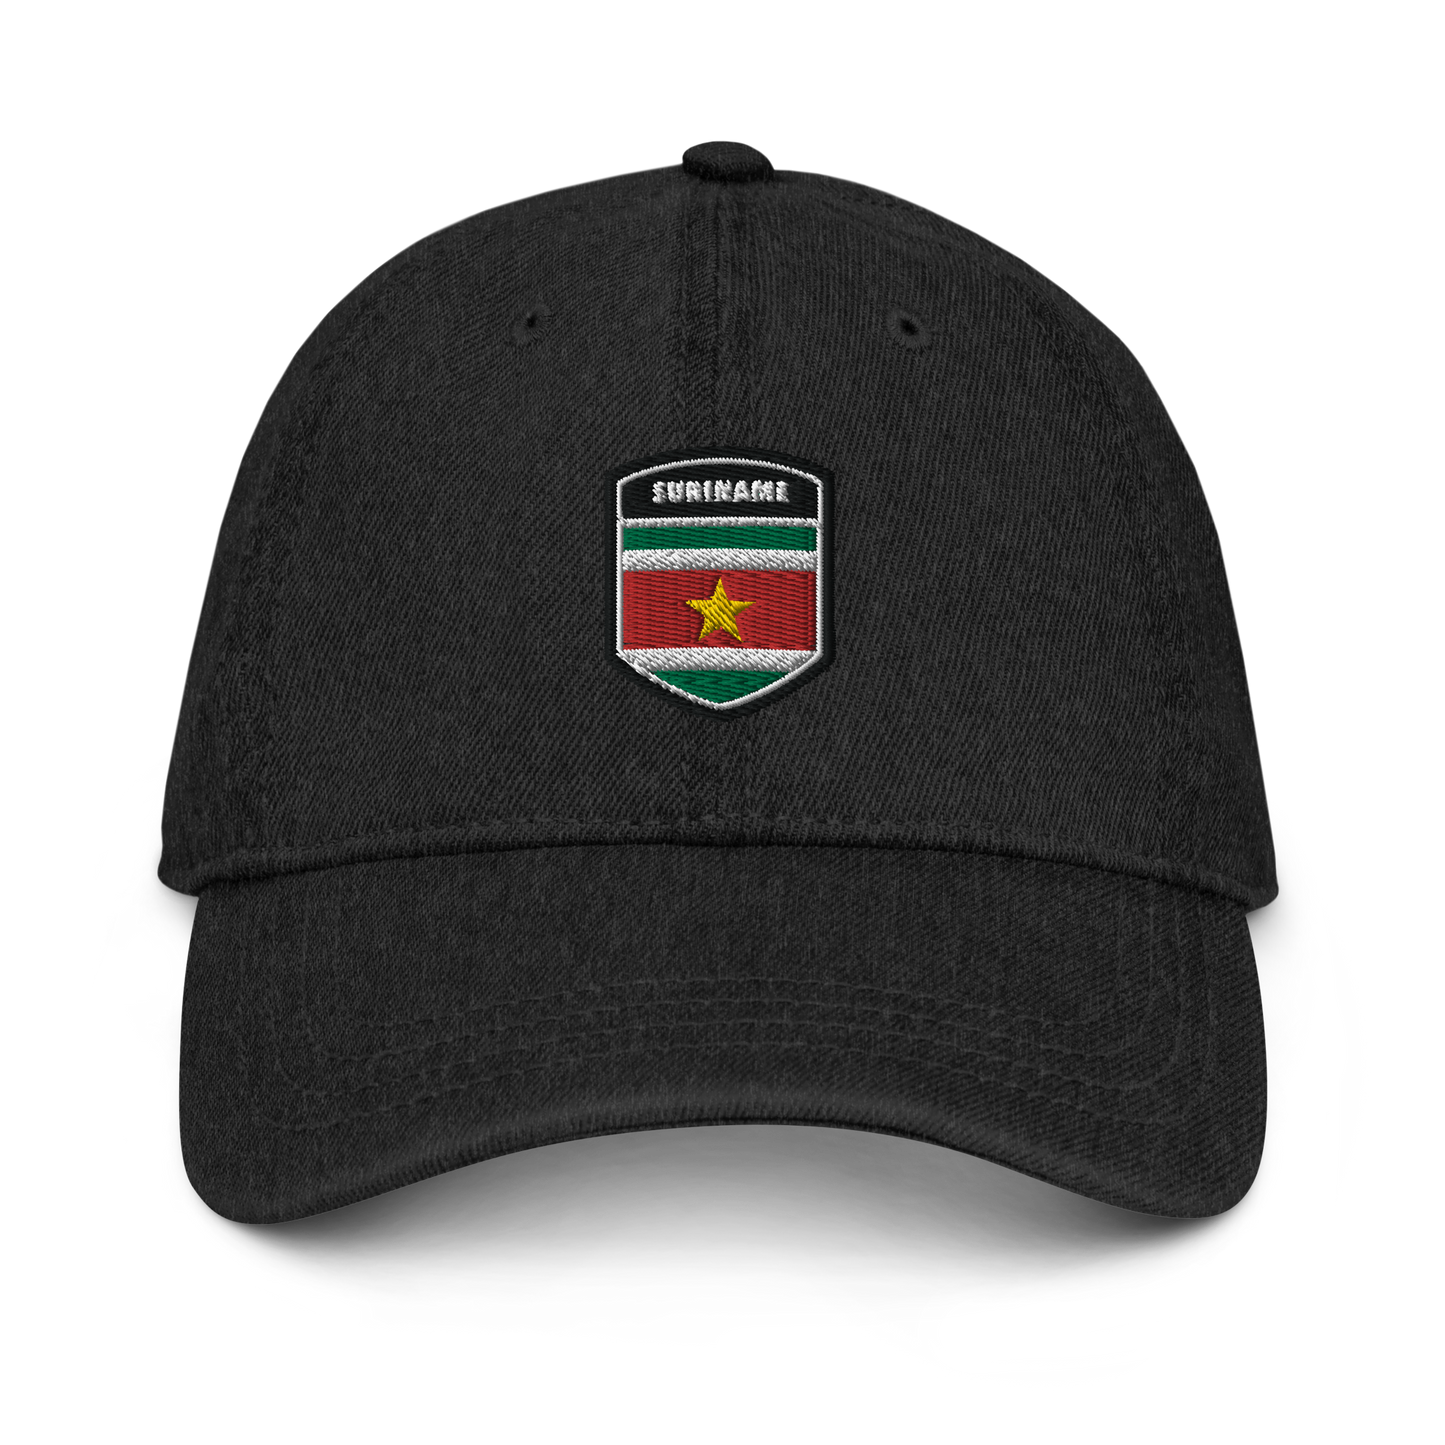 Suriname Denim Hat